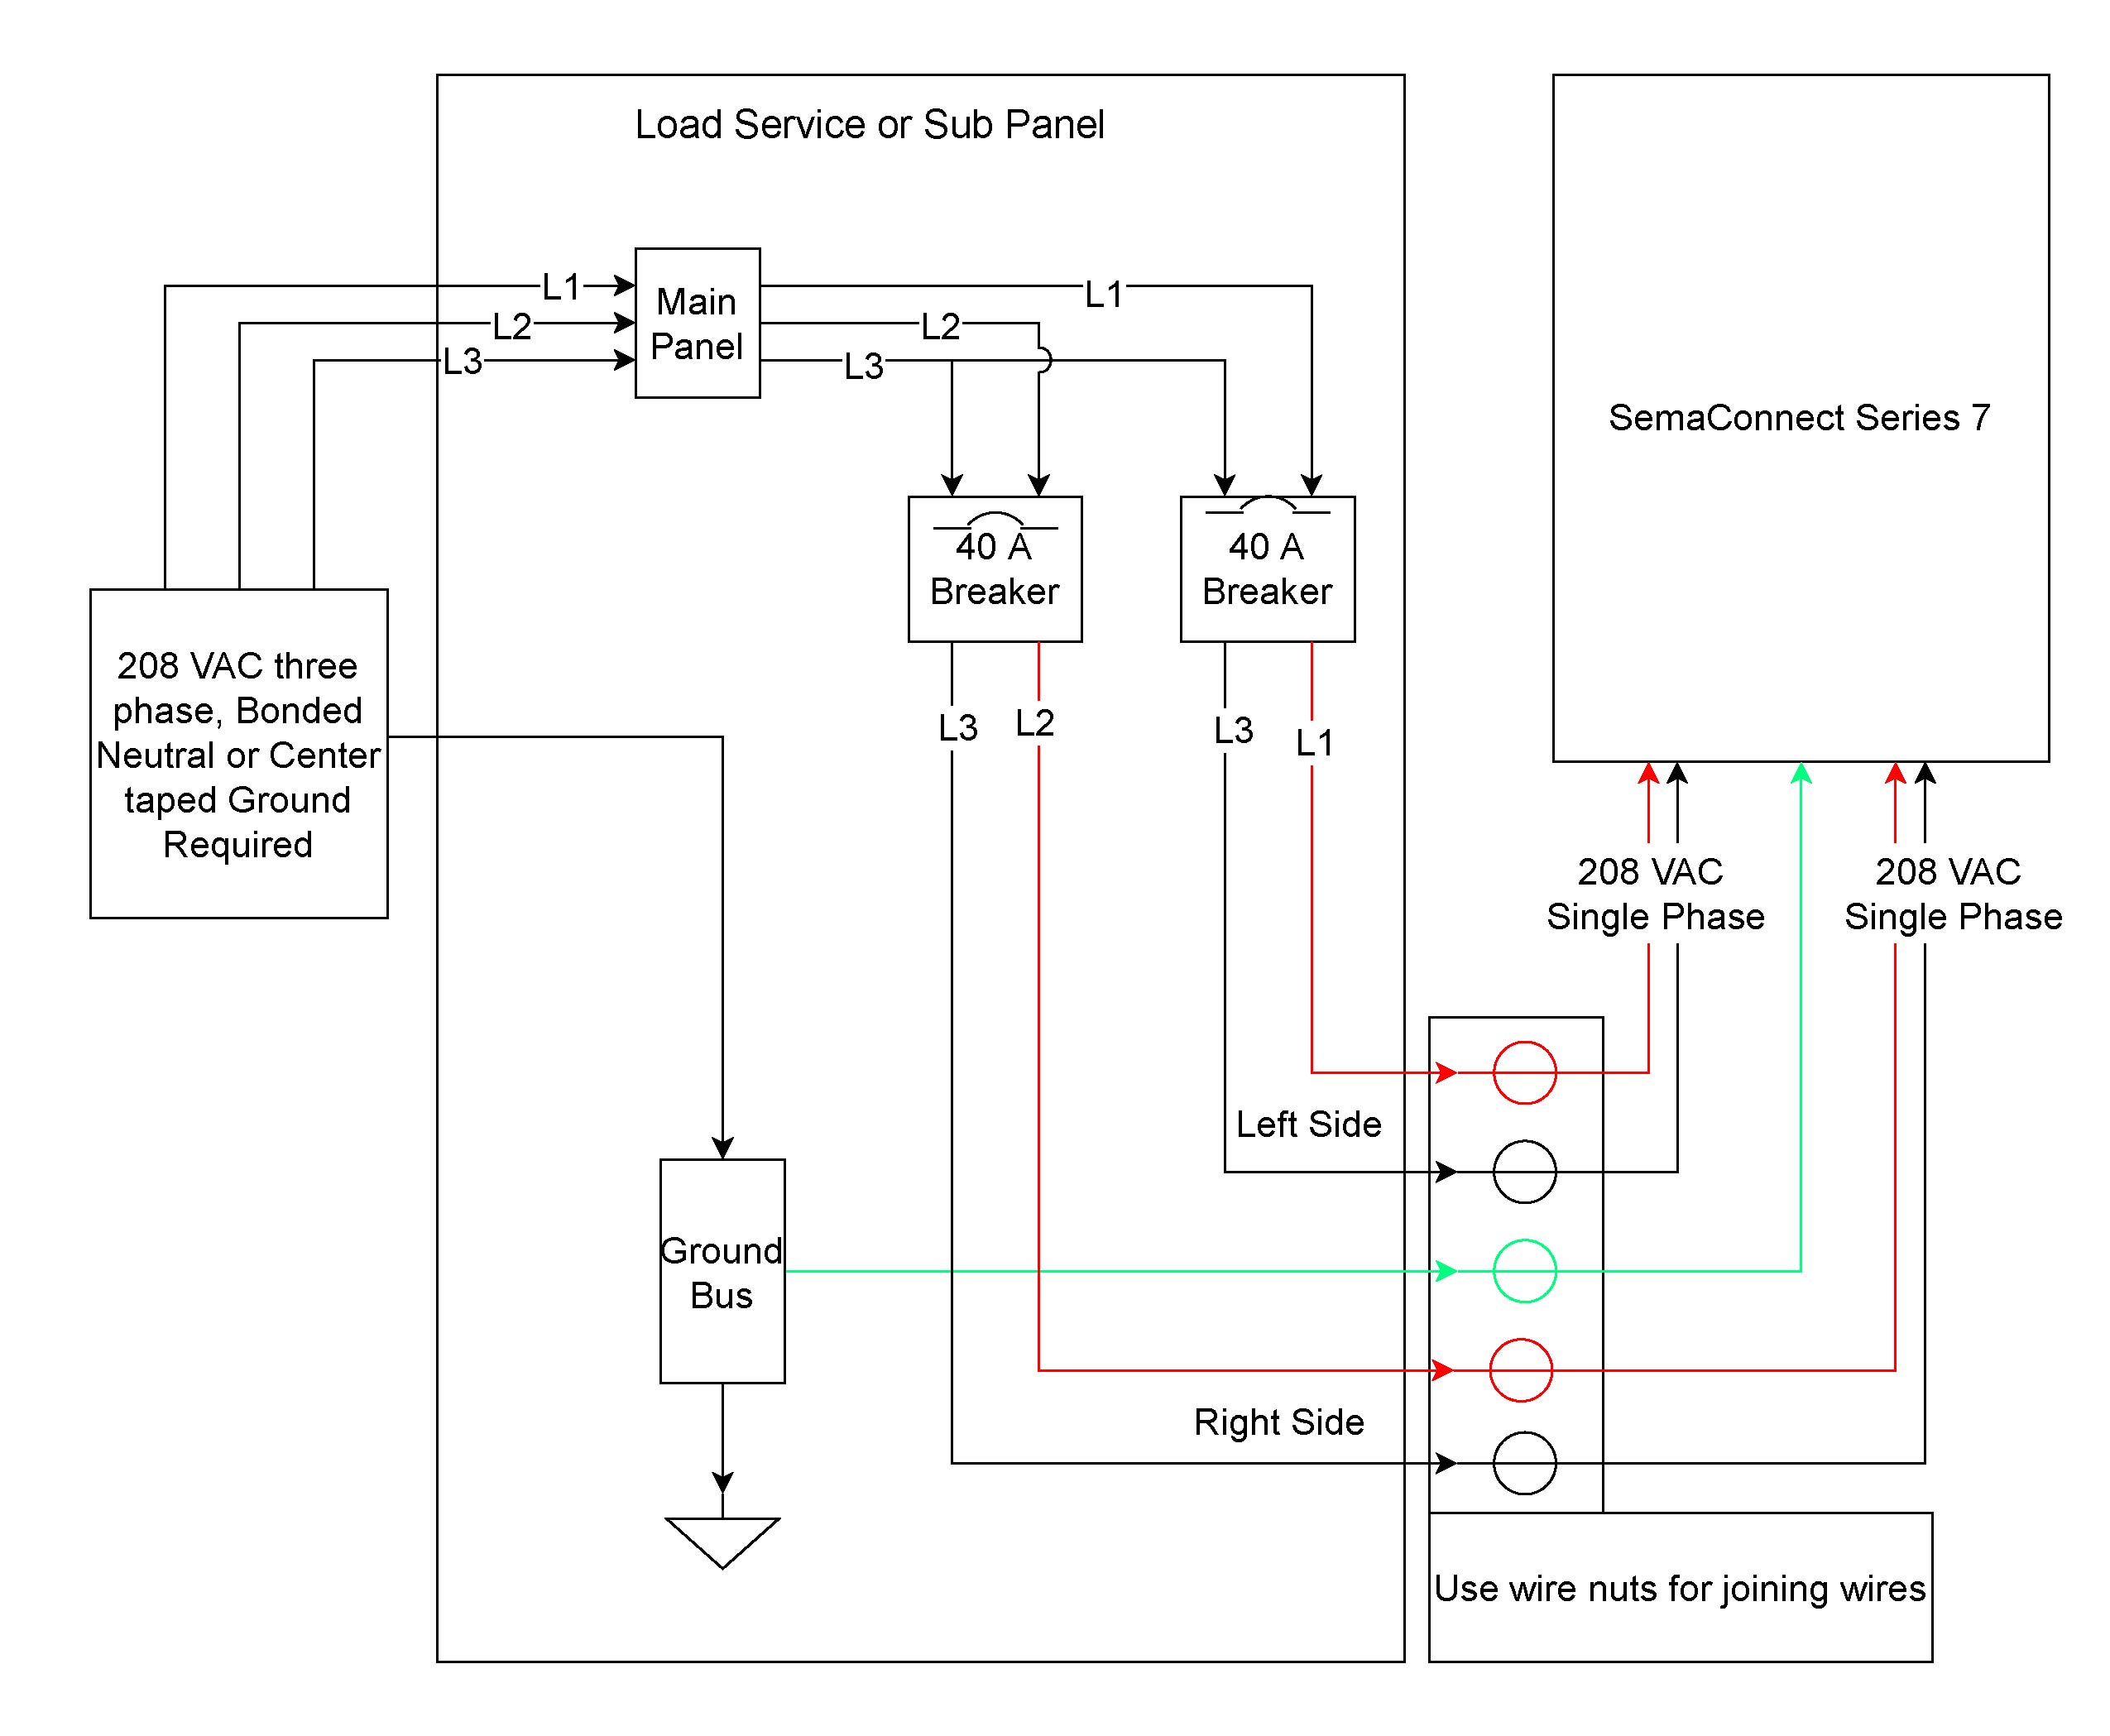 fill rite pump wiring diagram